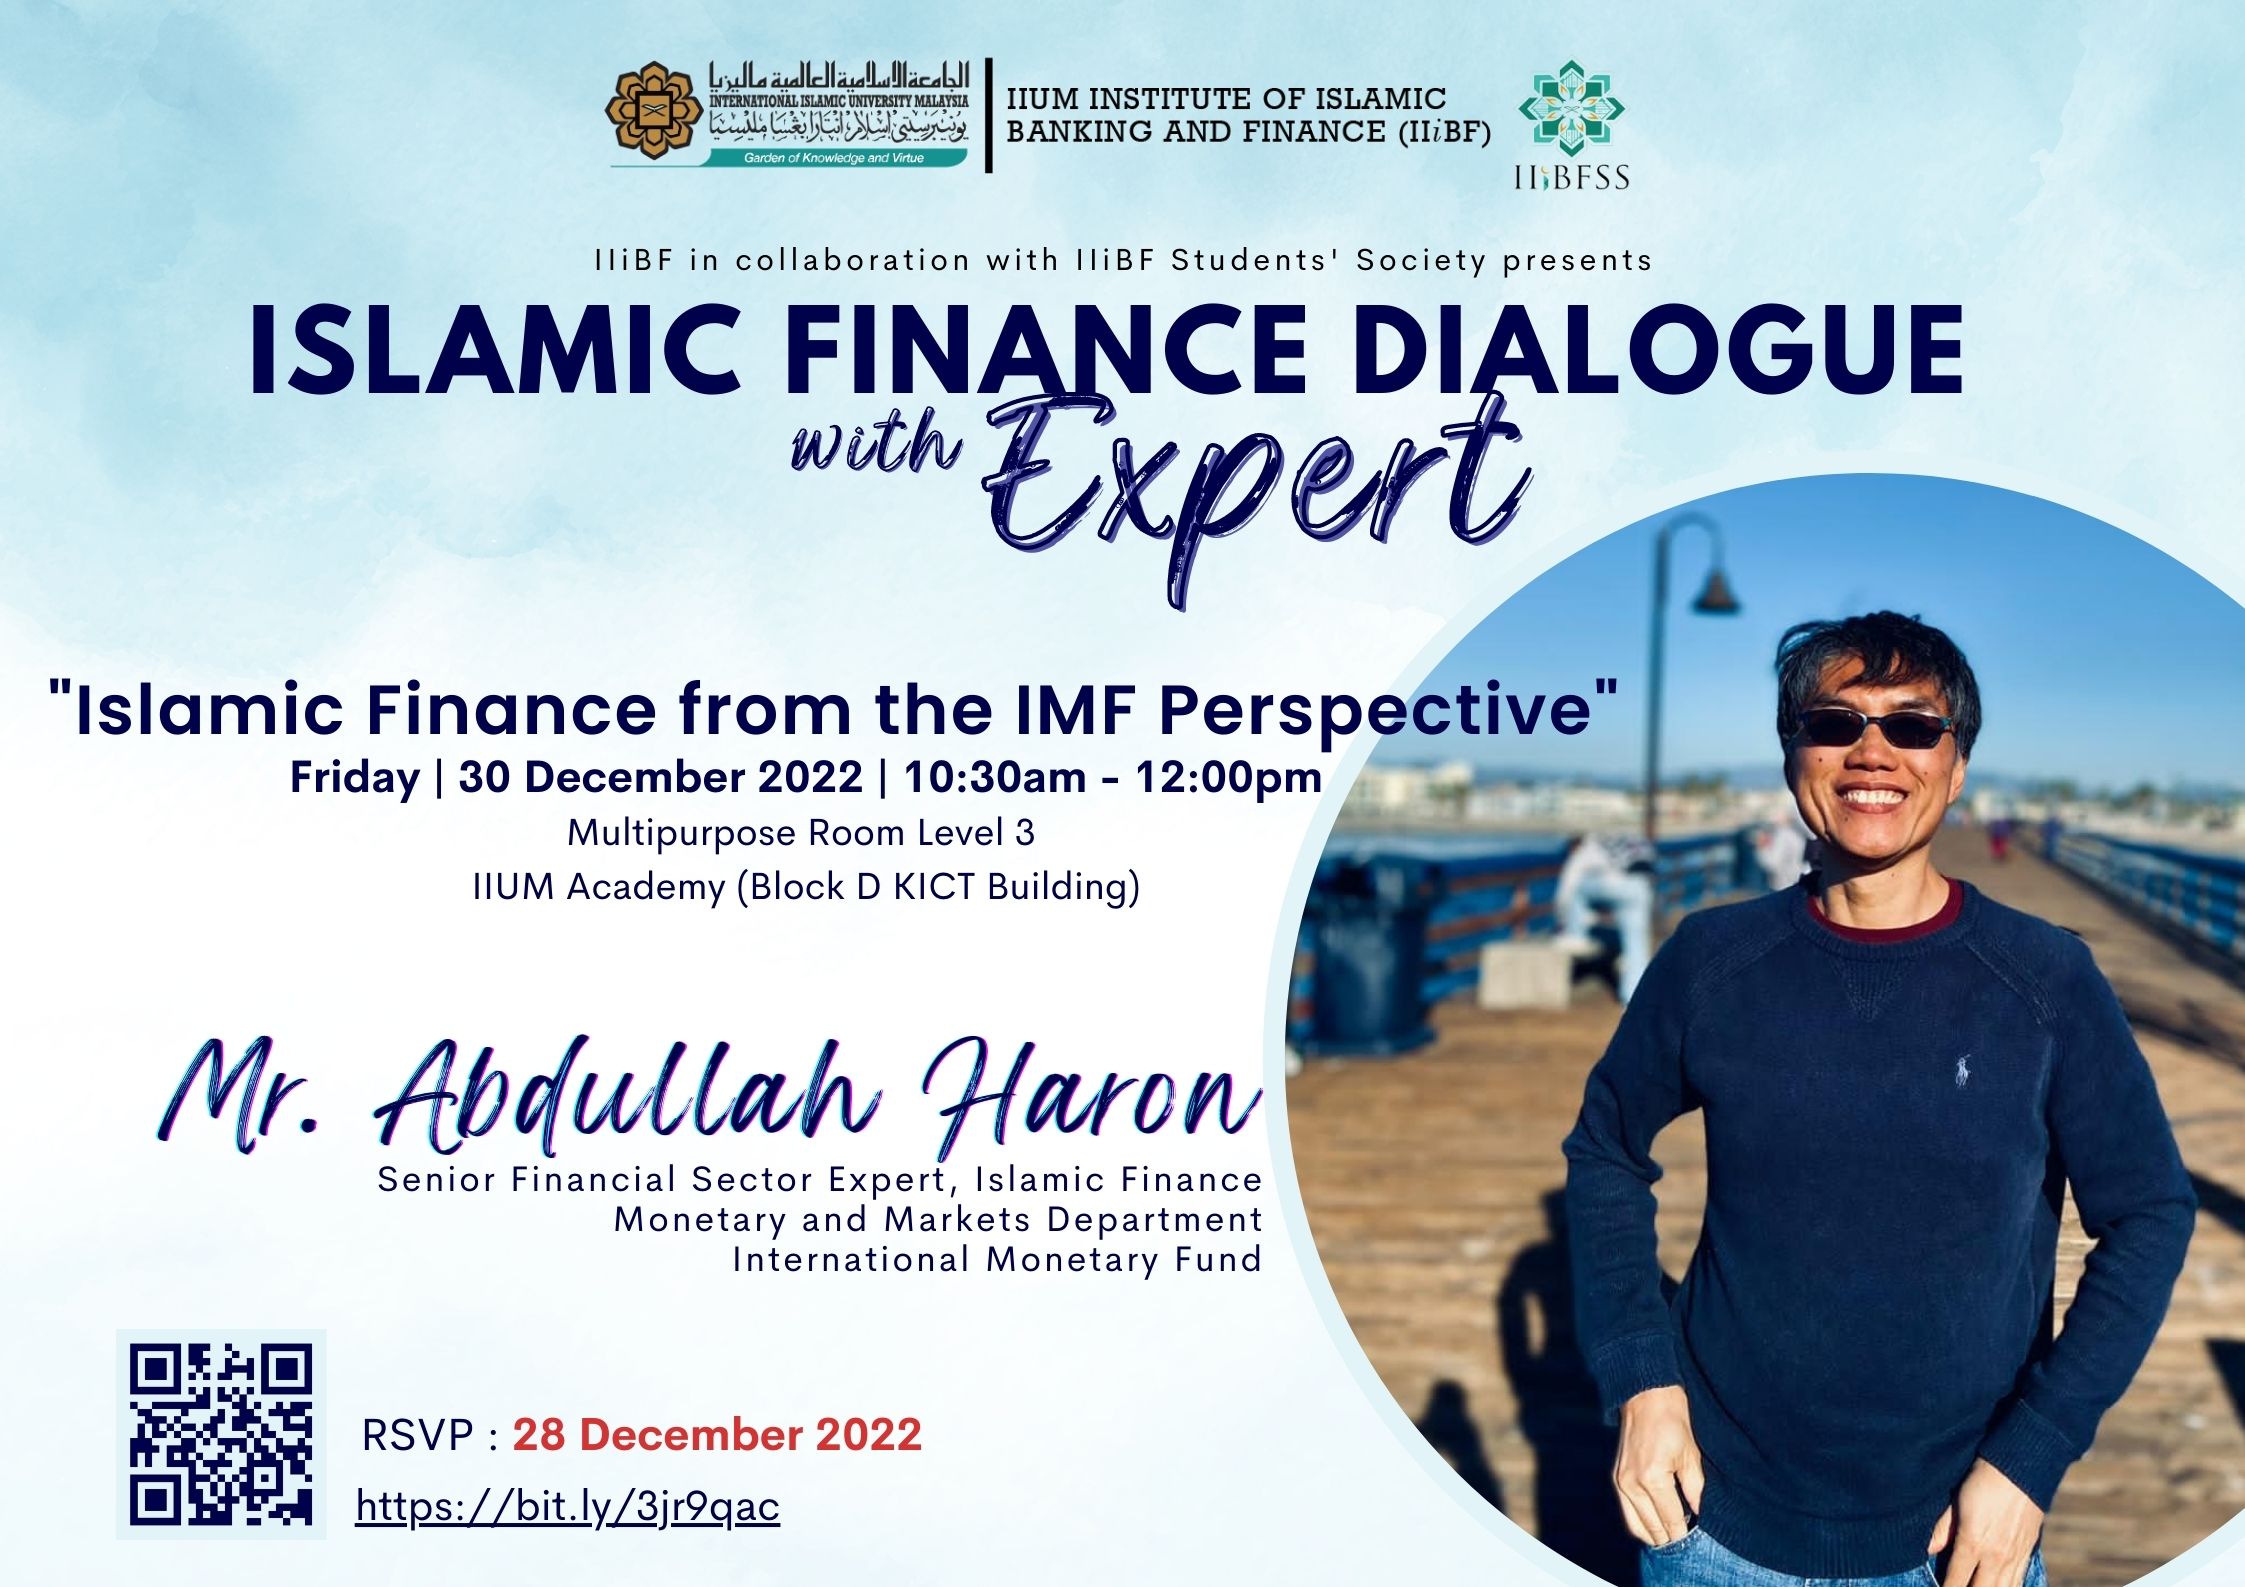 Islamic Finance Dialogue with Expert : Mr. Abdullah Haron, International Monetary Fund @ Friday, 30 December 2022